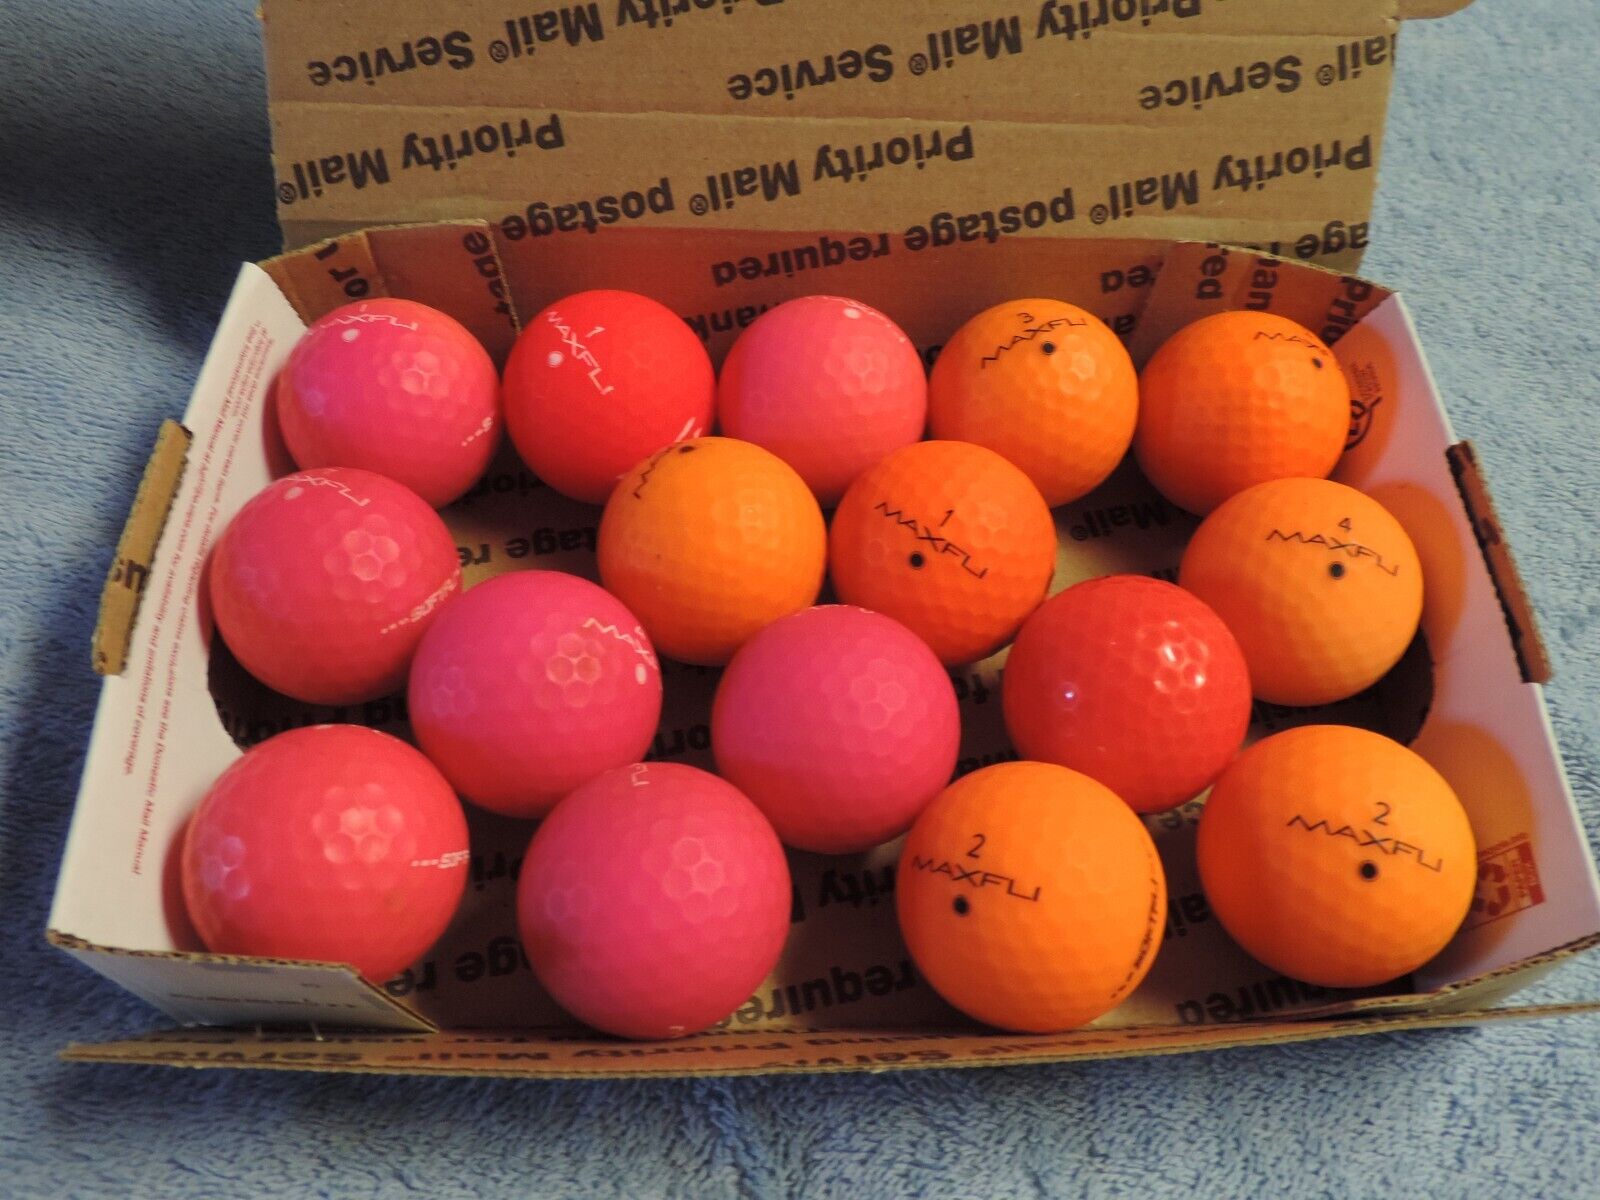 DE 15 MAXFLI Softfli and straight fli Red and Orange golf balls